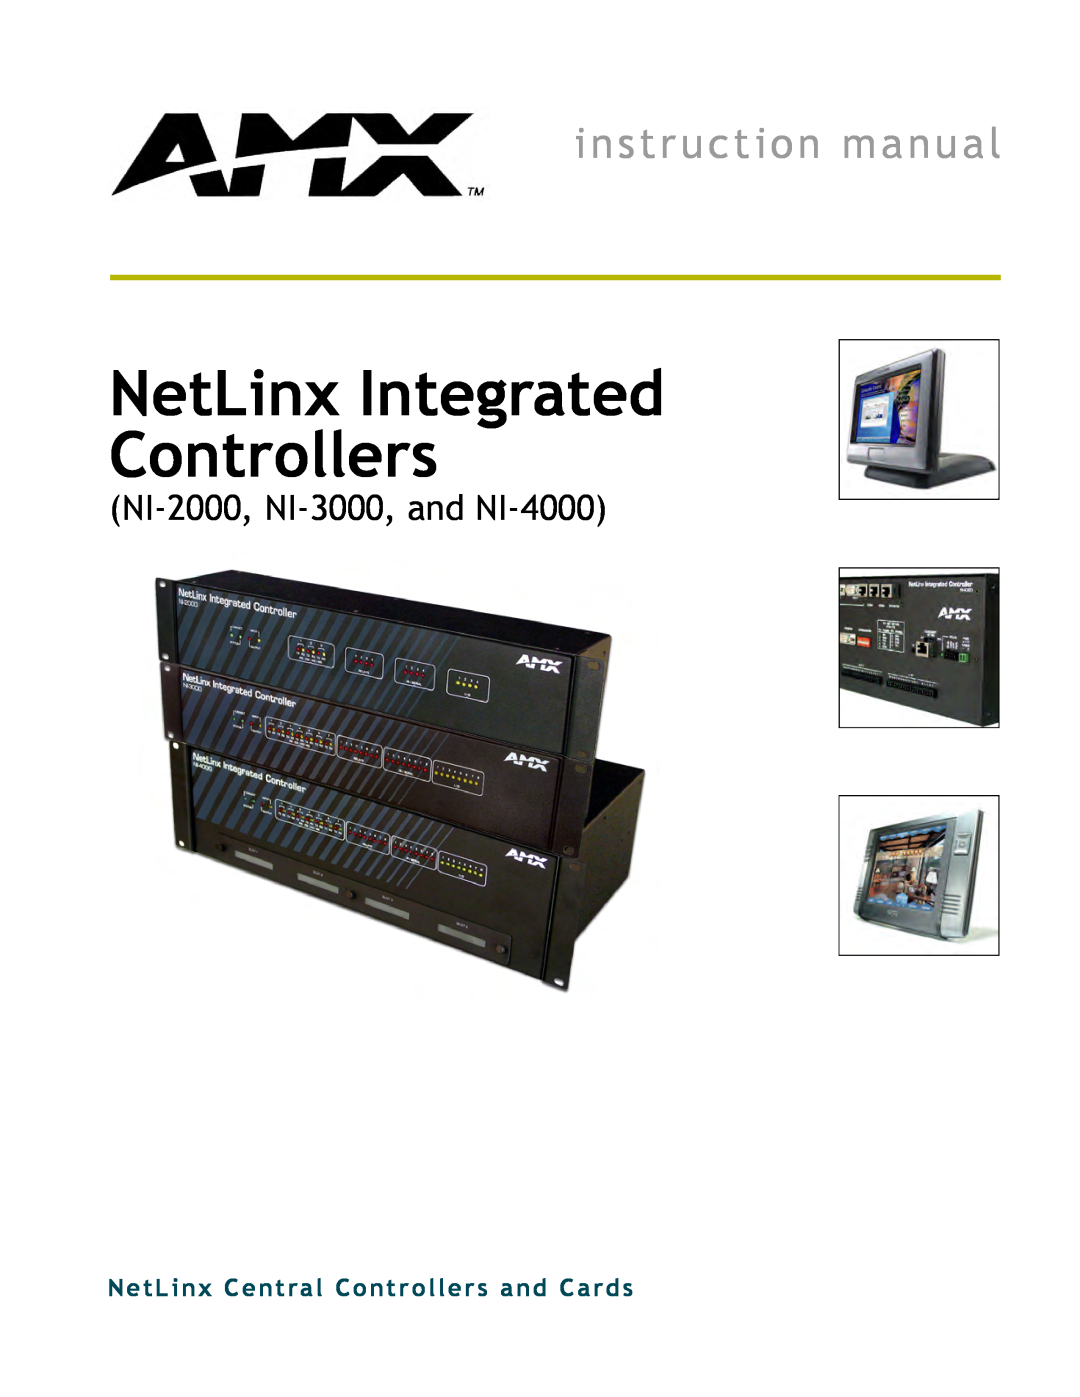 AMX instruction manual NetLinx Integrated Controllers, NI-2000, NI-3000, and NI-4000 